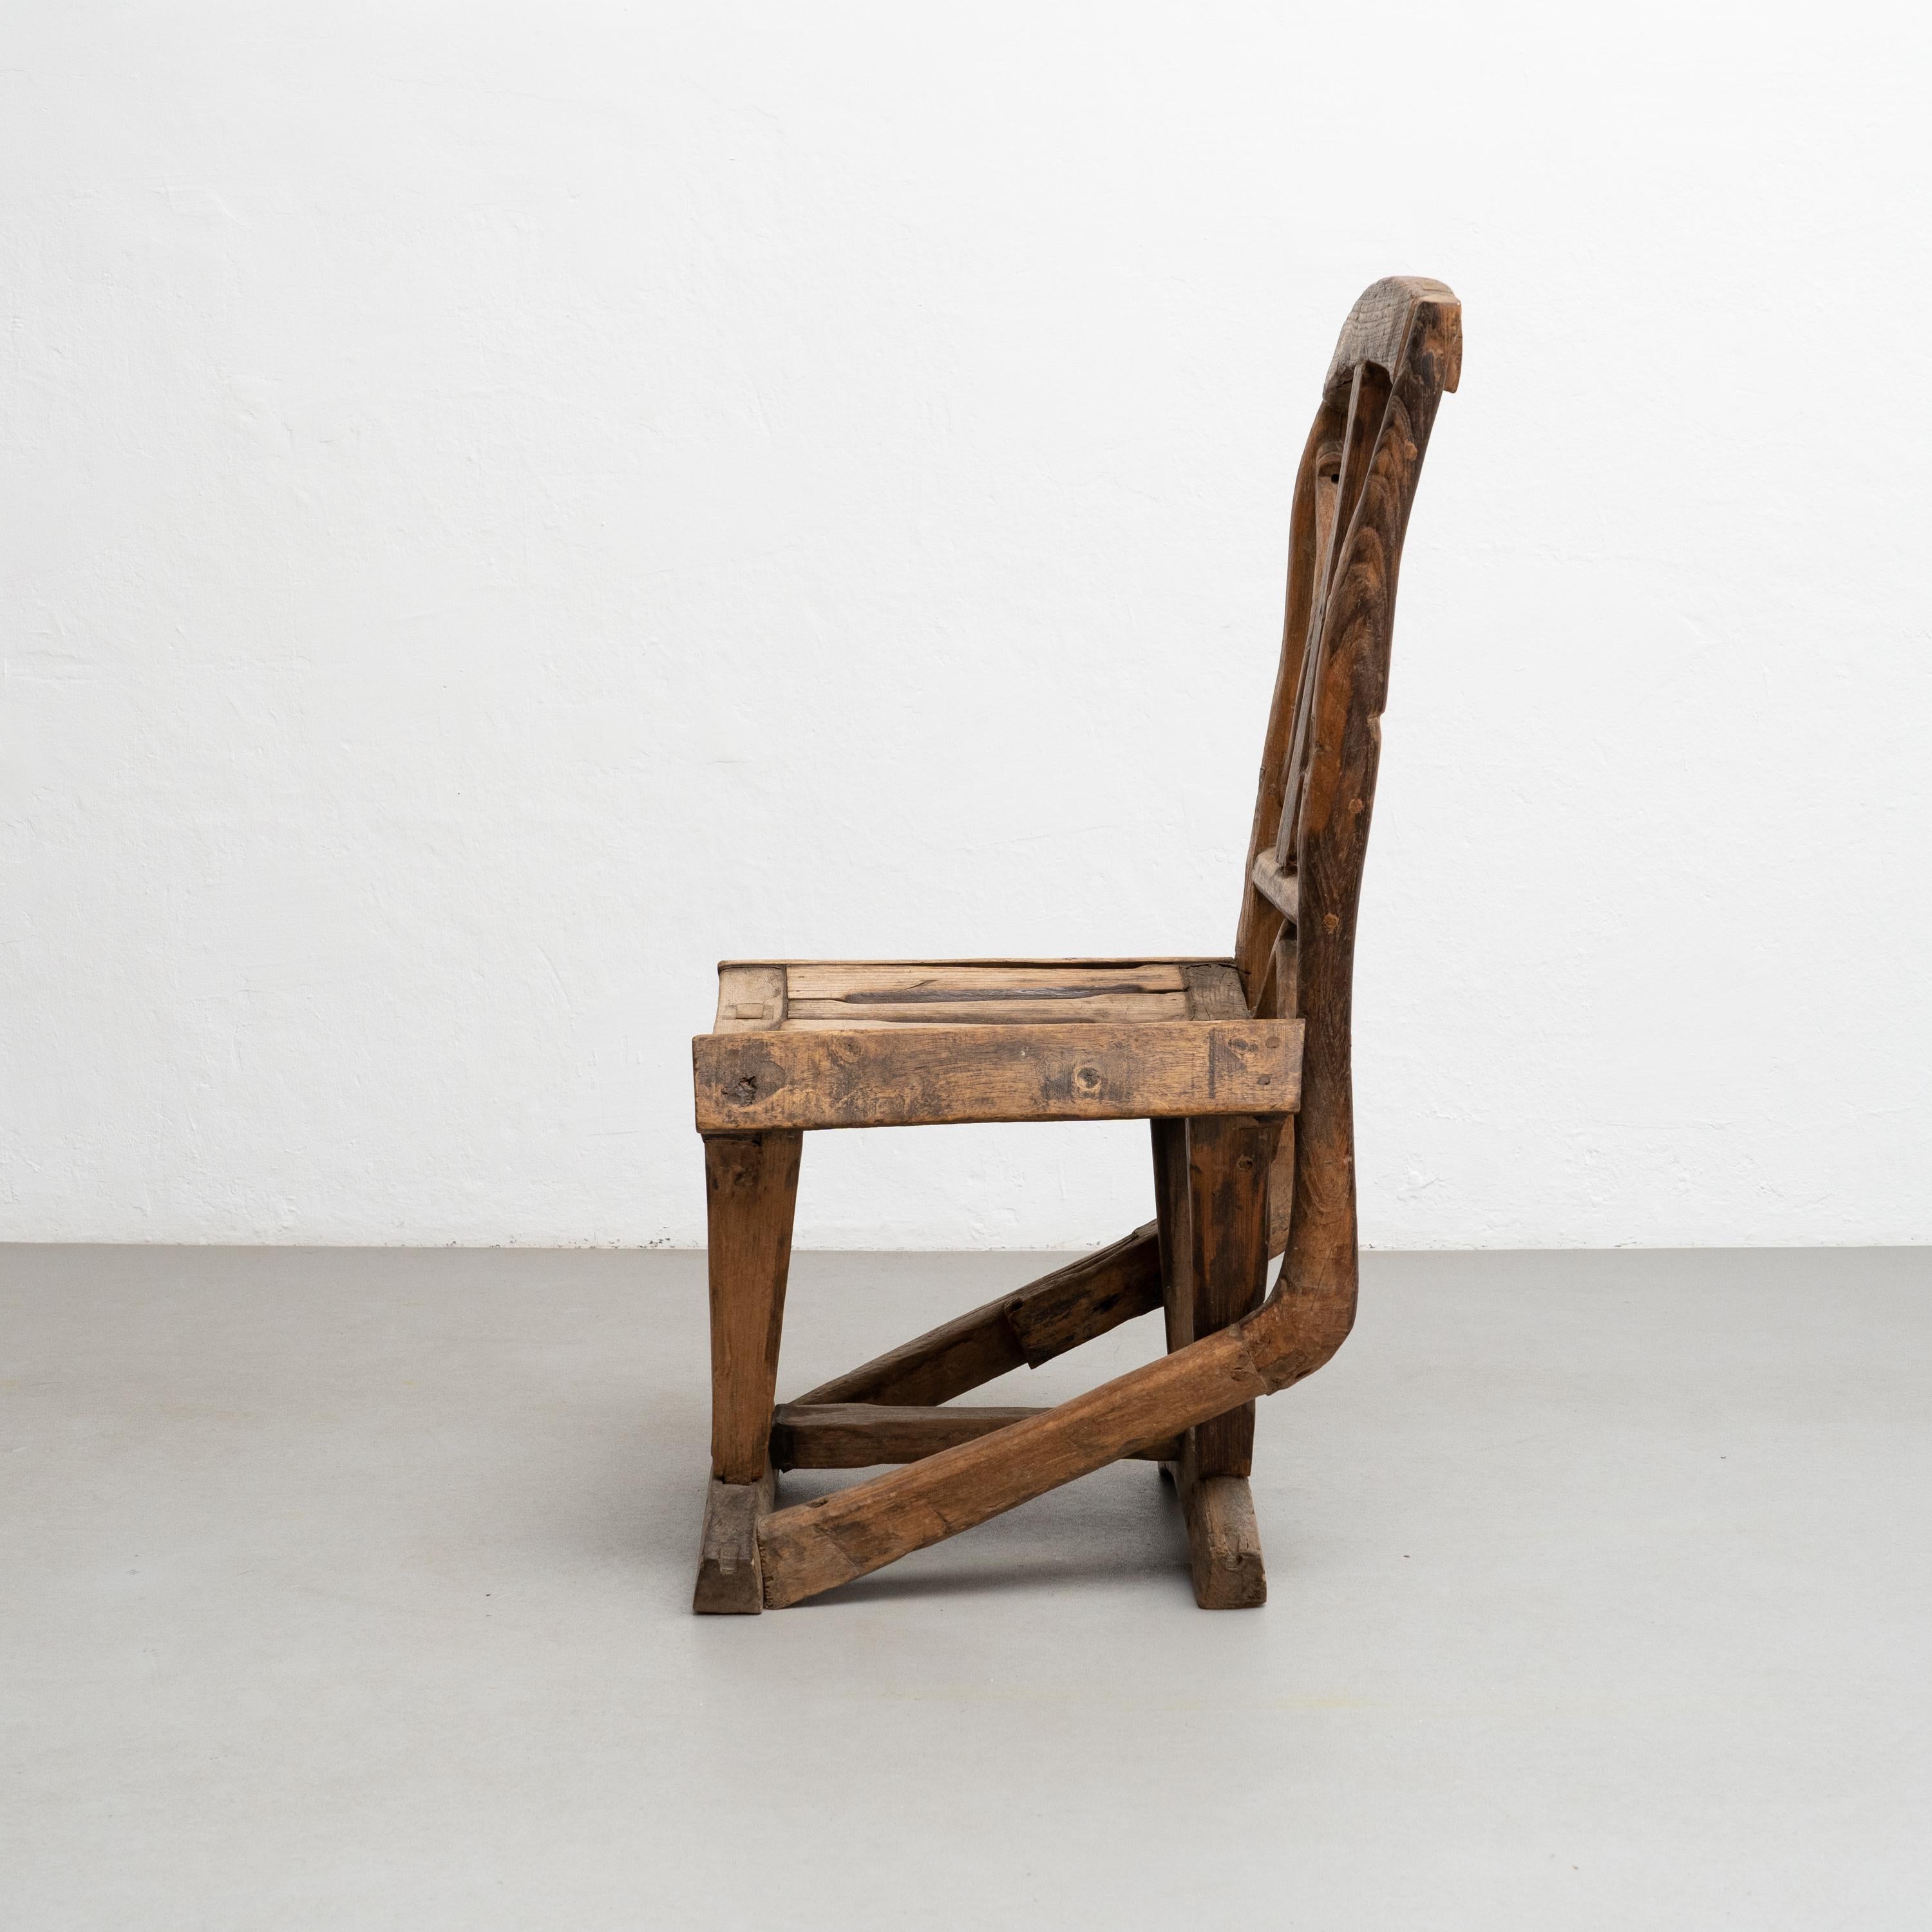 handmade wooden chairs